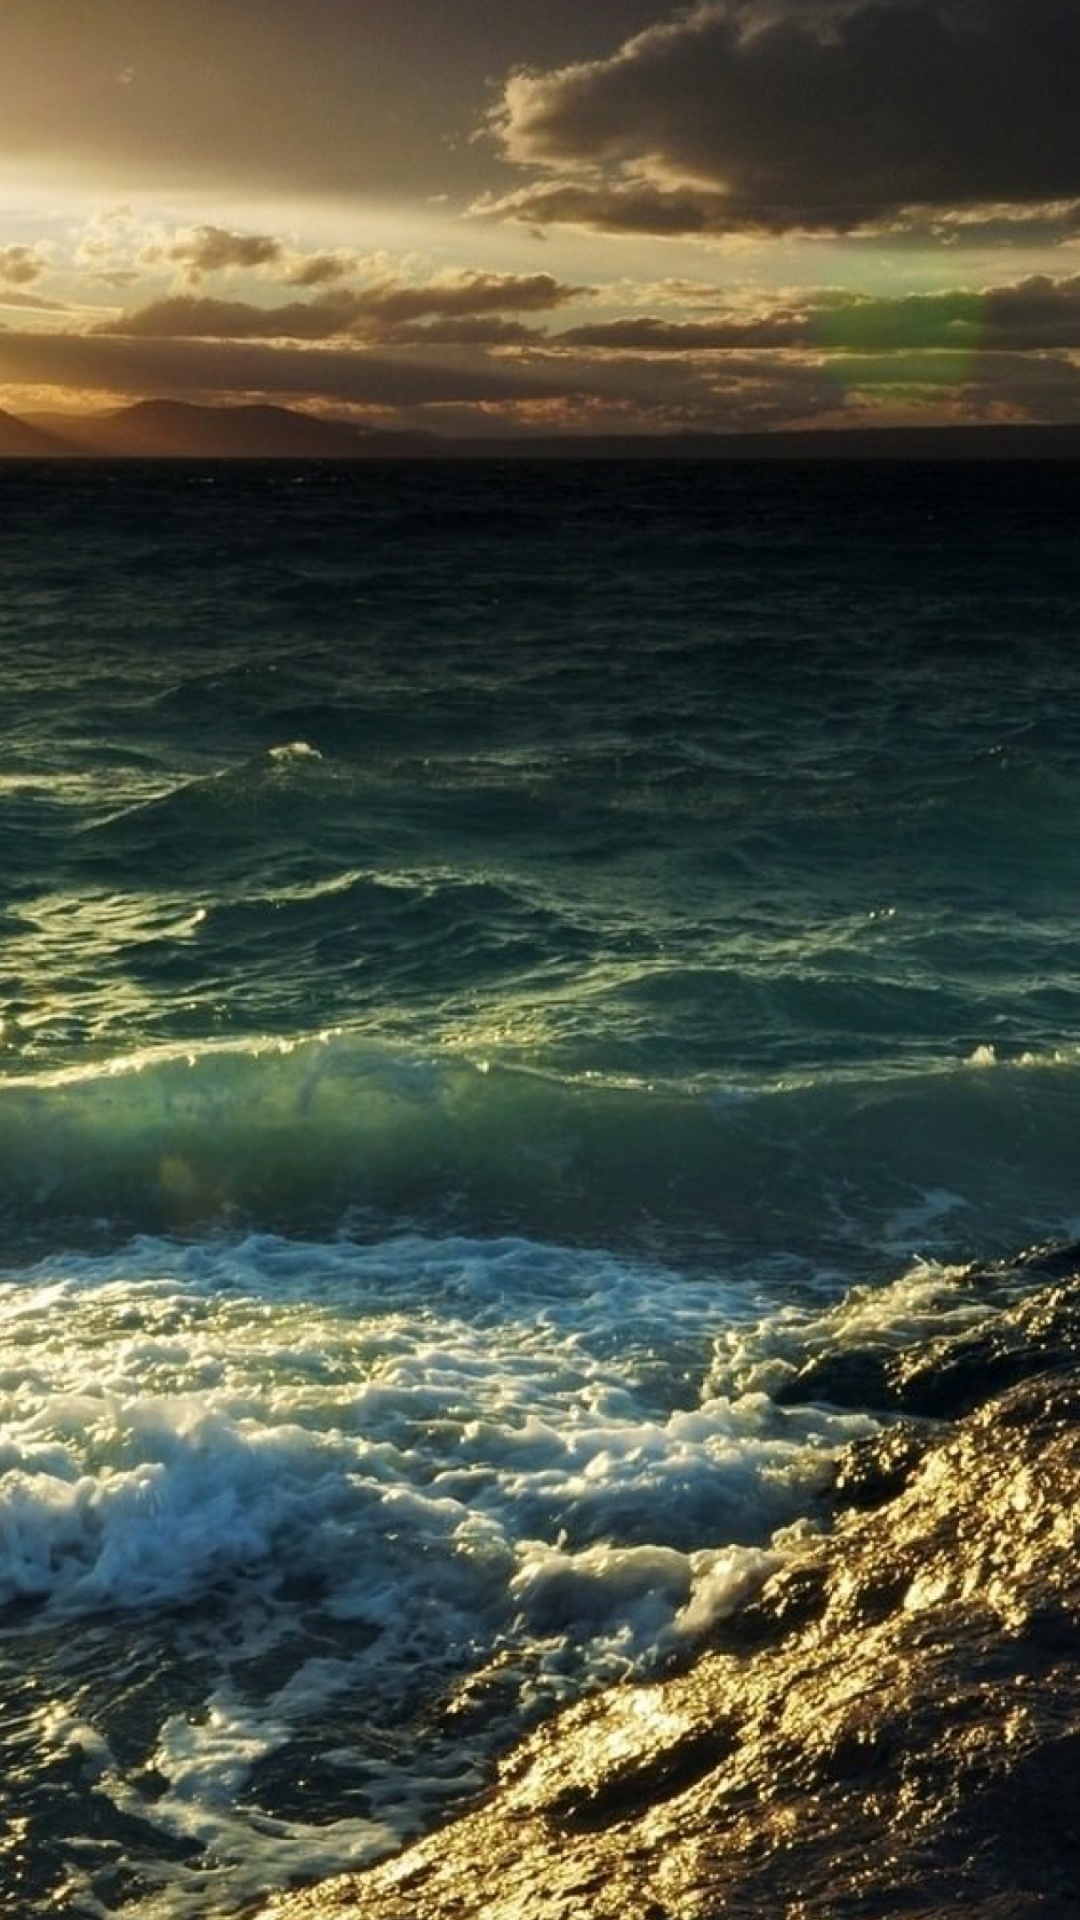 Ocean Waves Crashing on Shore During Sunset. Wallpaper in 1080x1920 Resolution